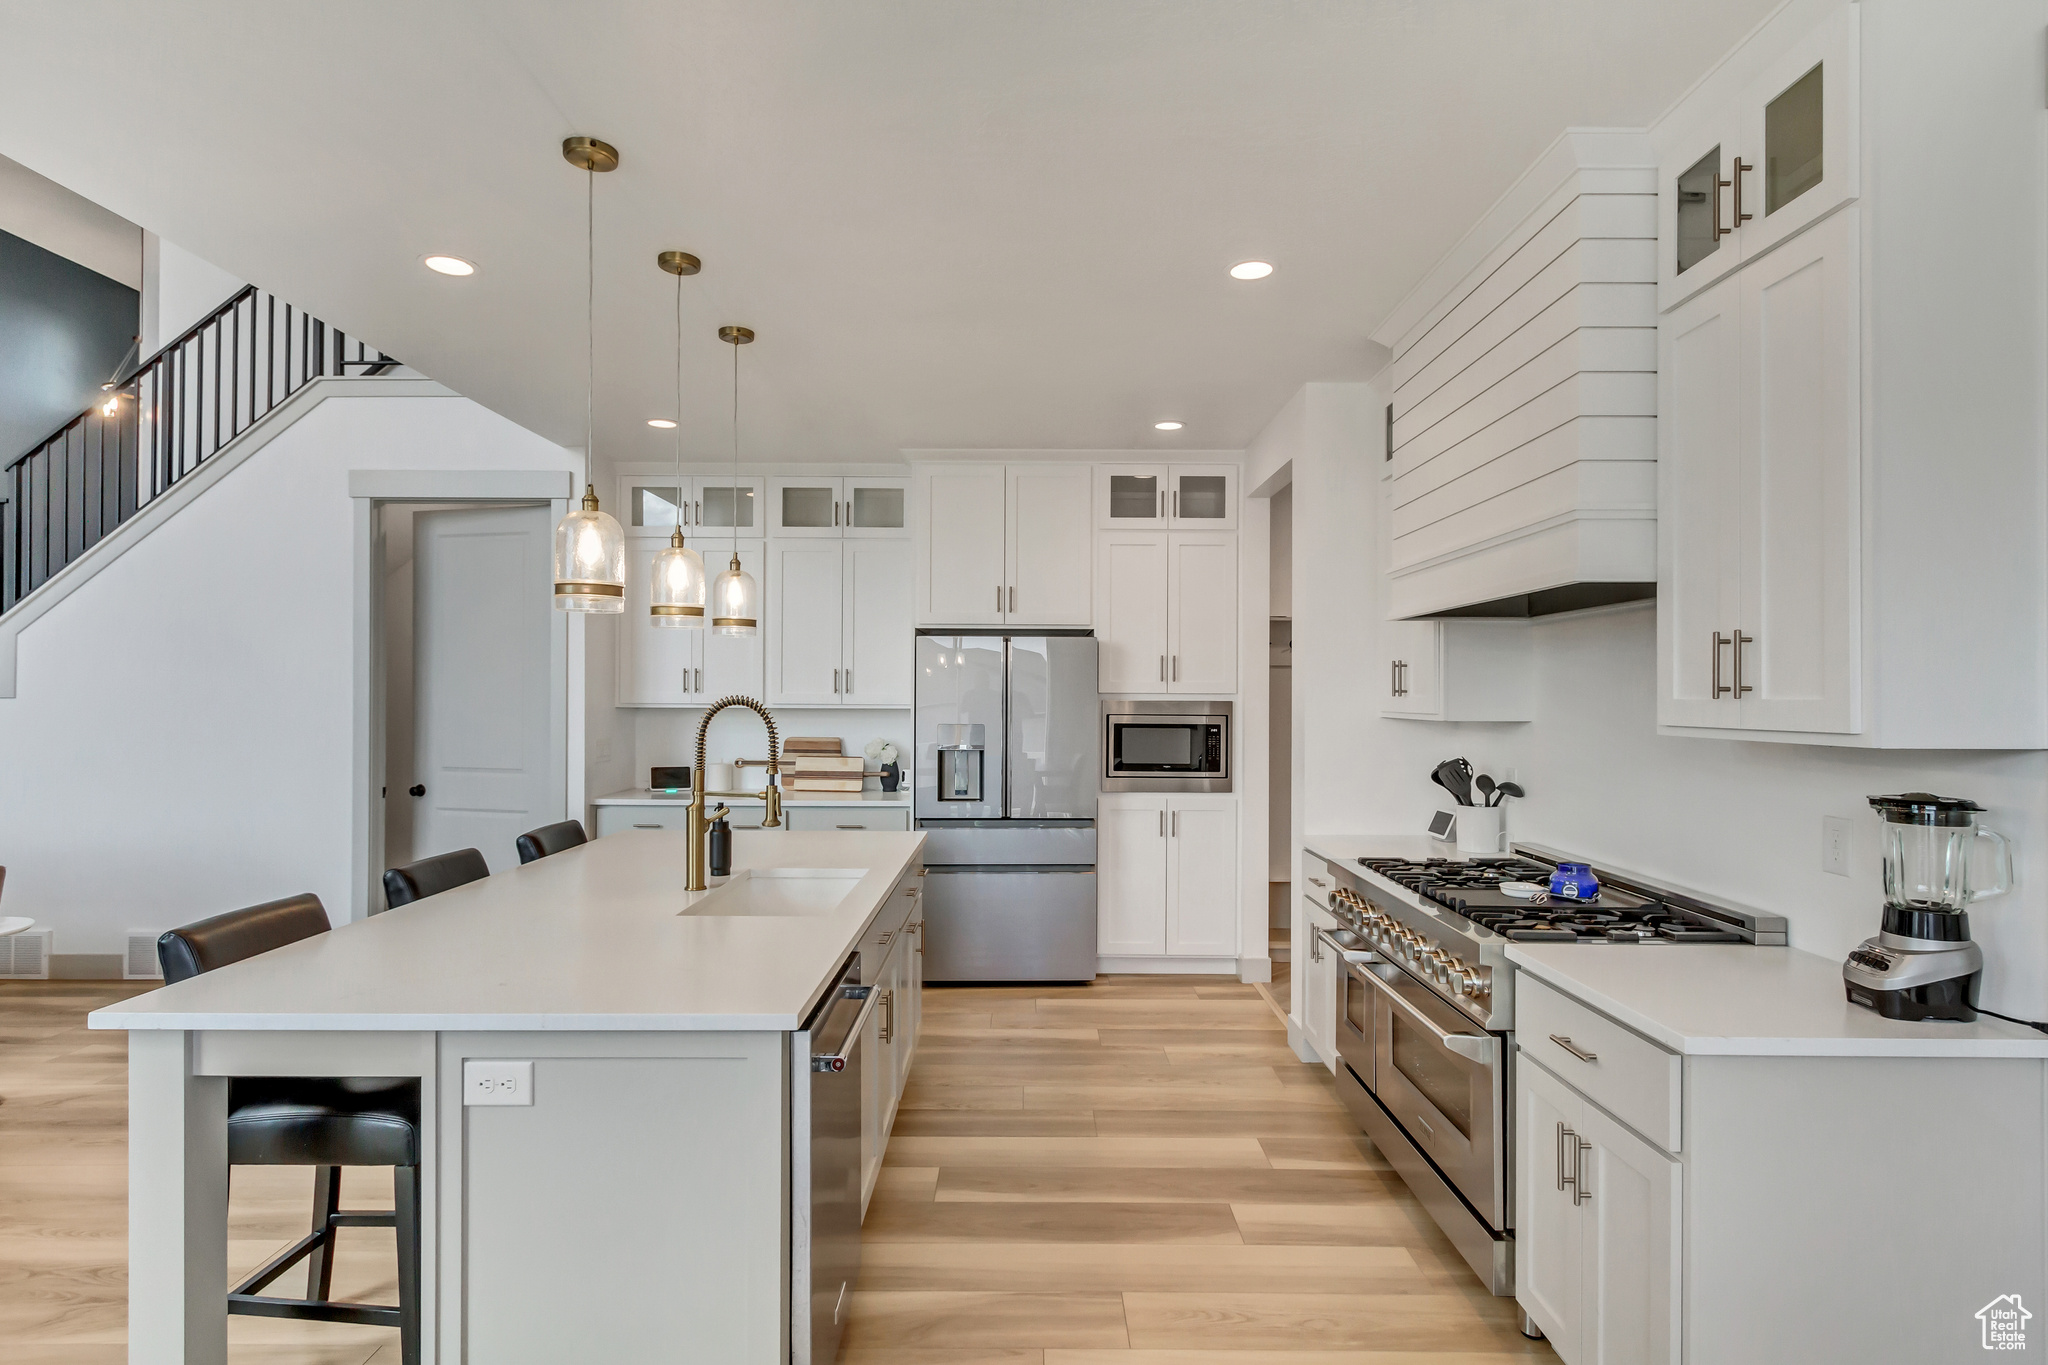 Kitchen featuring sink, light wood-type flooring, stainless steel appliances, premium range hood, and pendant lighting